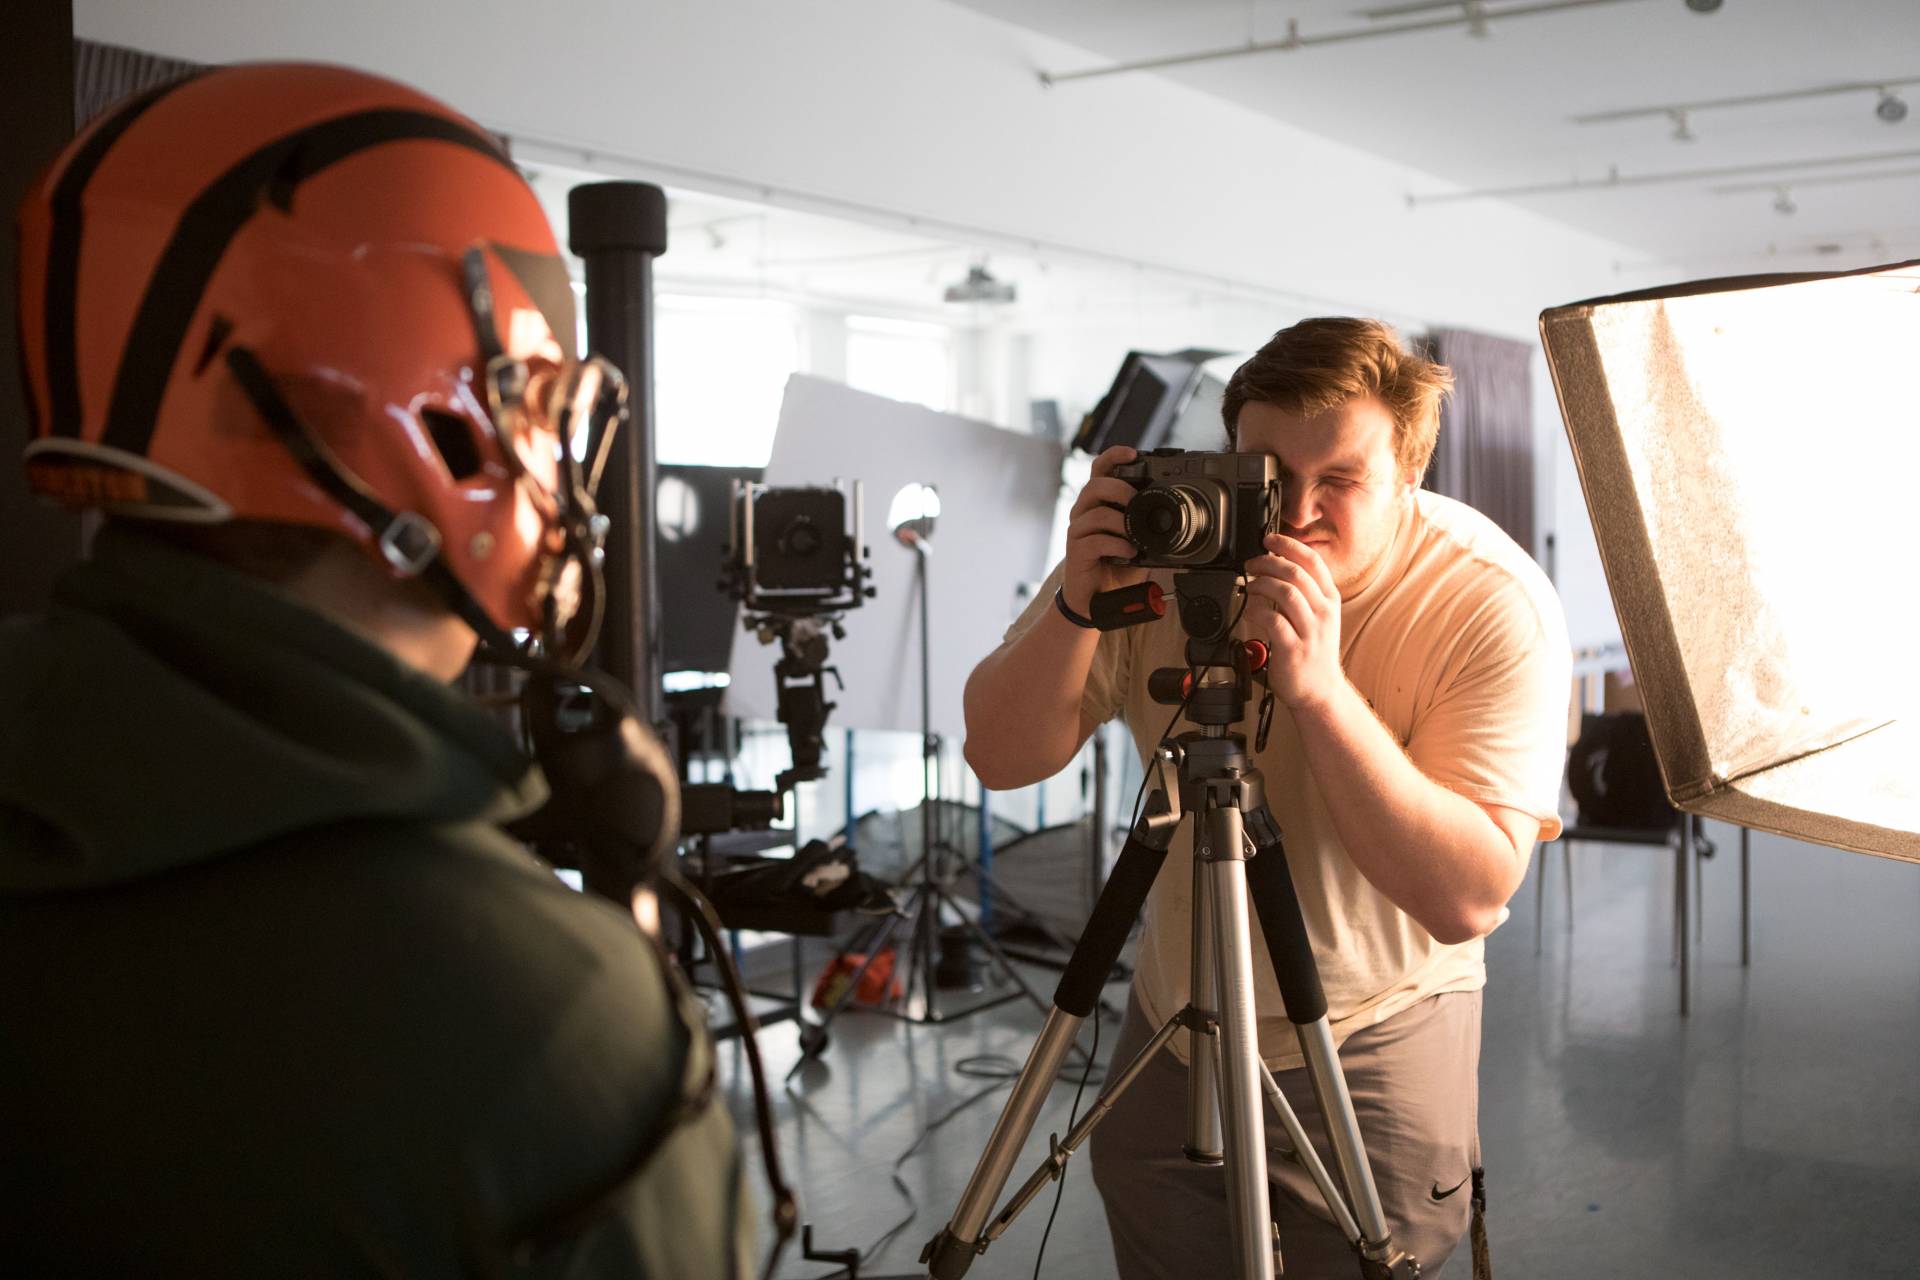 Logan photographs student in studio